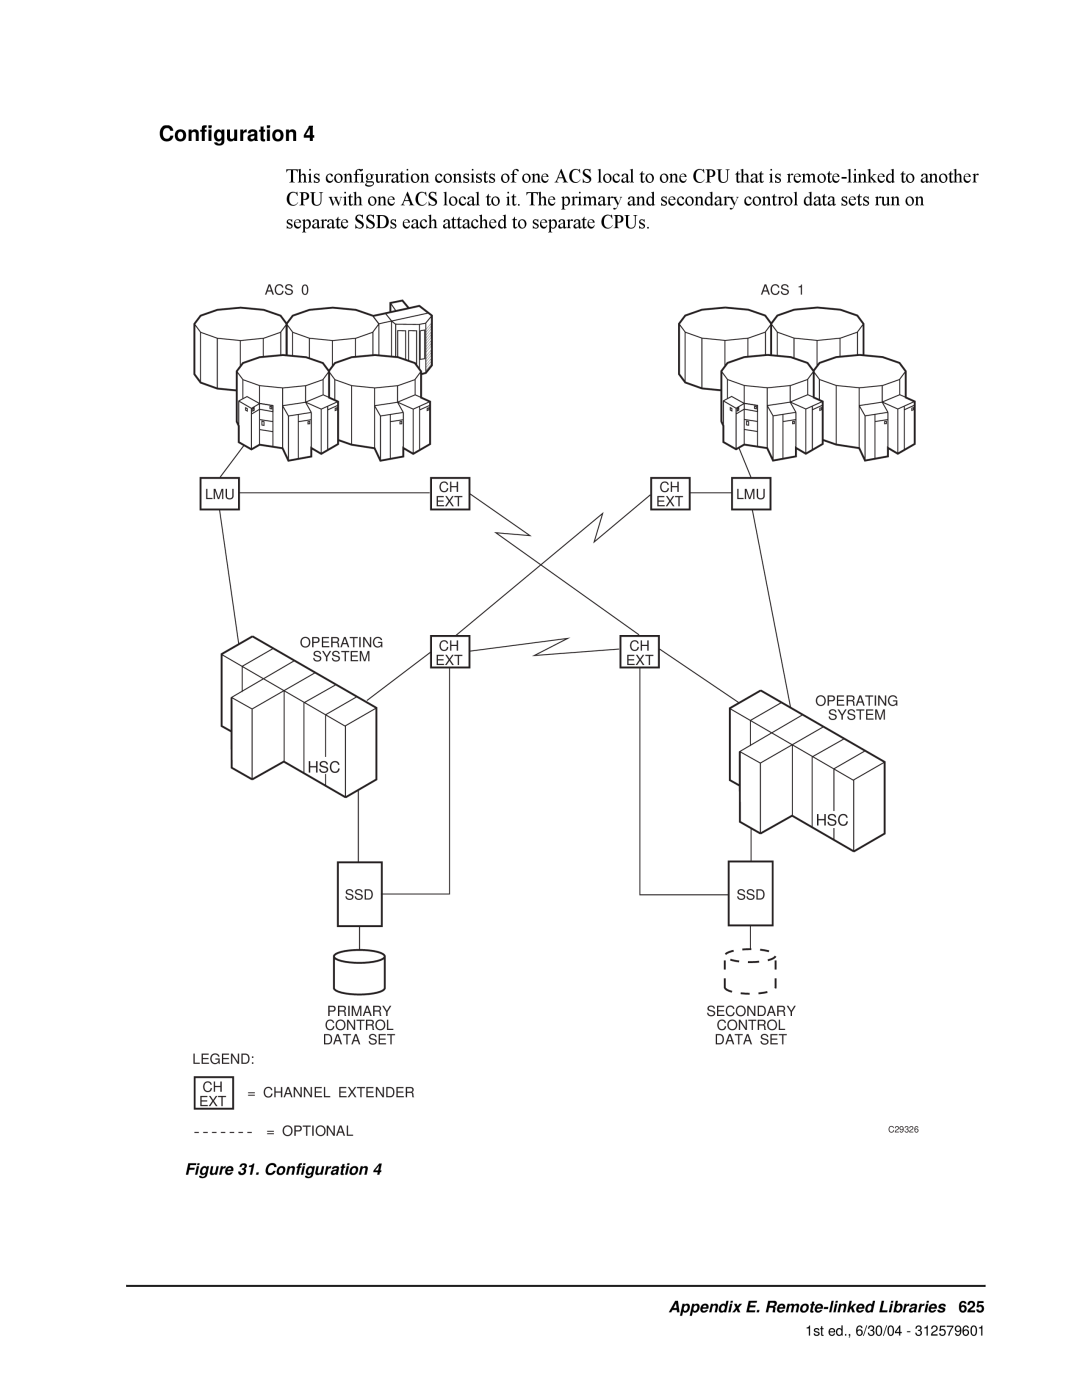 StorageTek 6 manual Configuration, Appendix E. Remote-linkedLibraries 